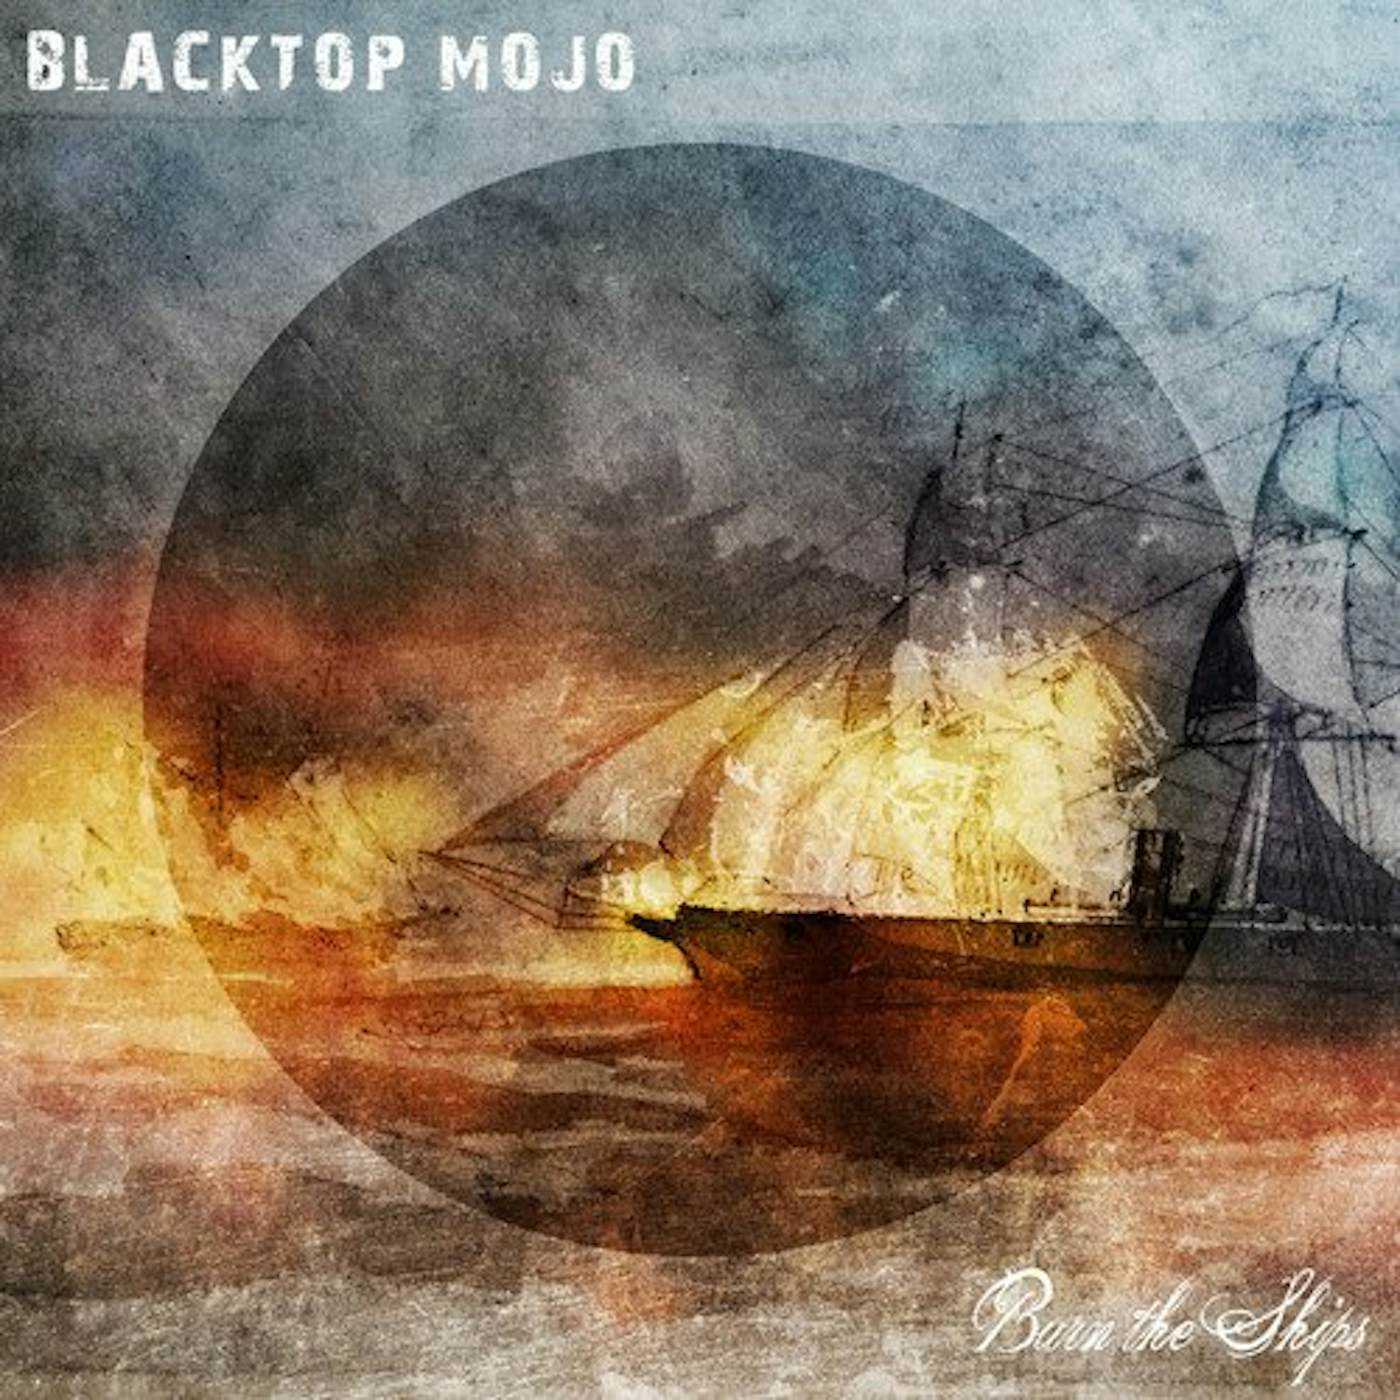 Blacktop Mojo Burn the Ships Vinyl Record